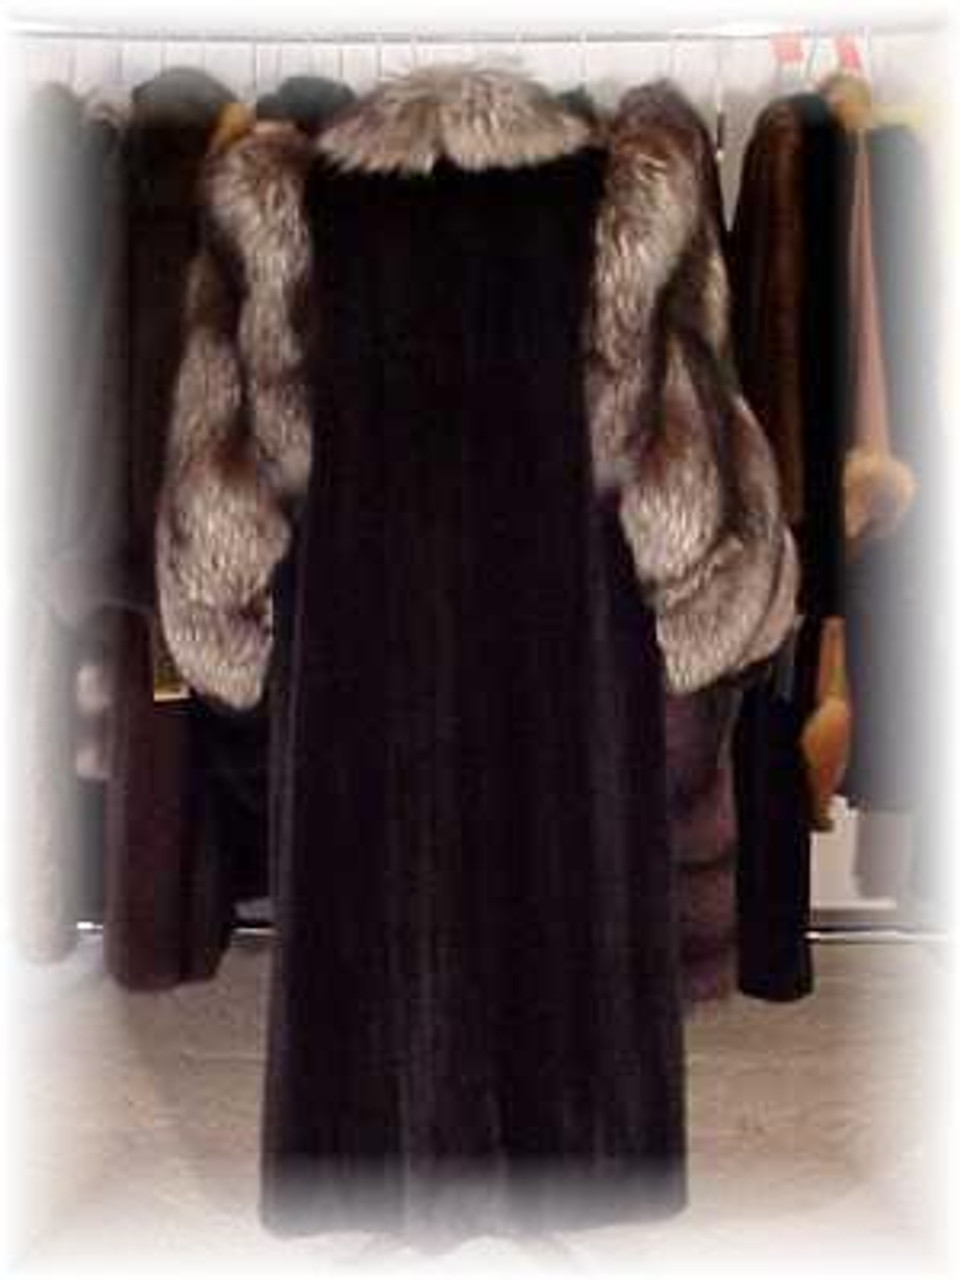 Full Skin Mink Fur Coat with Fox Trim